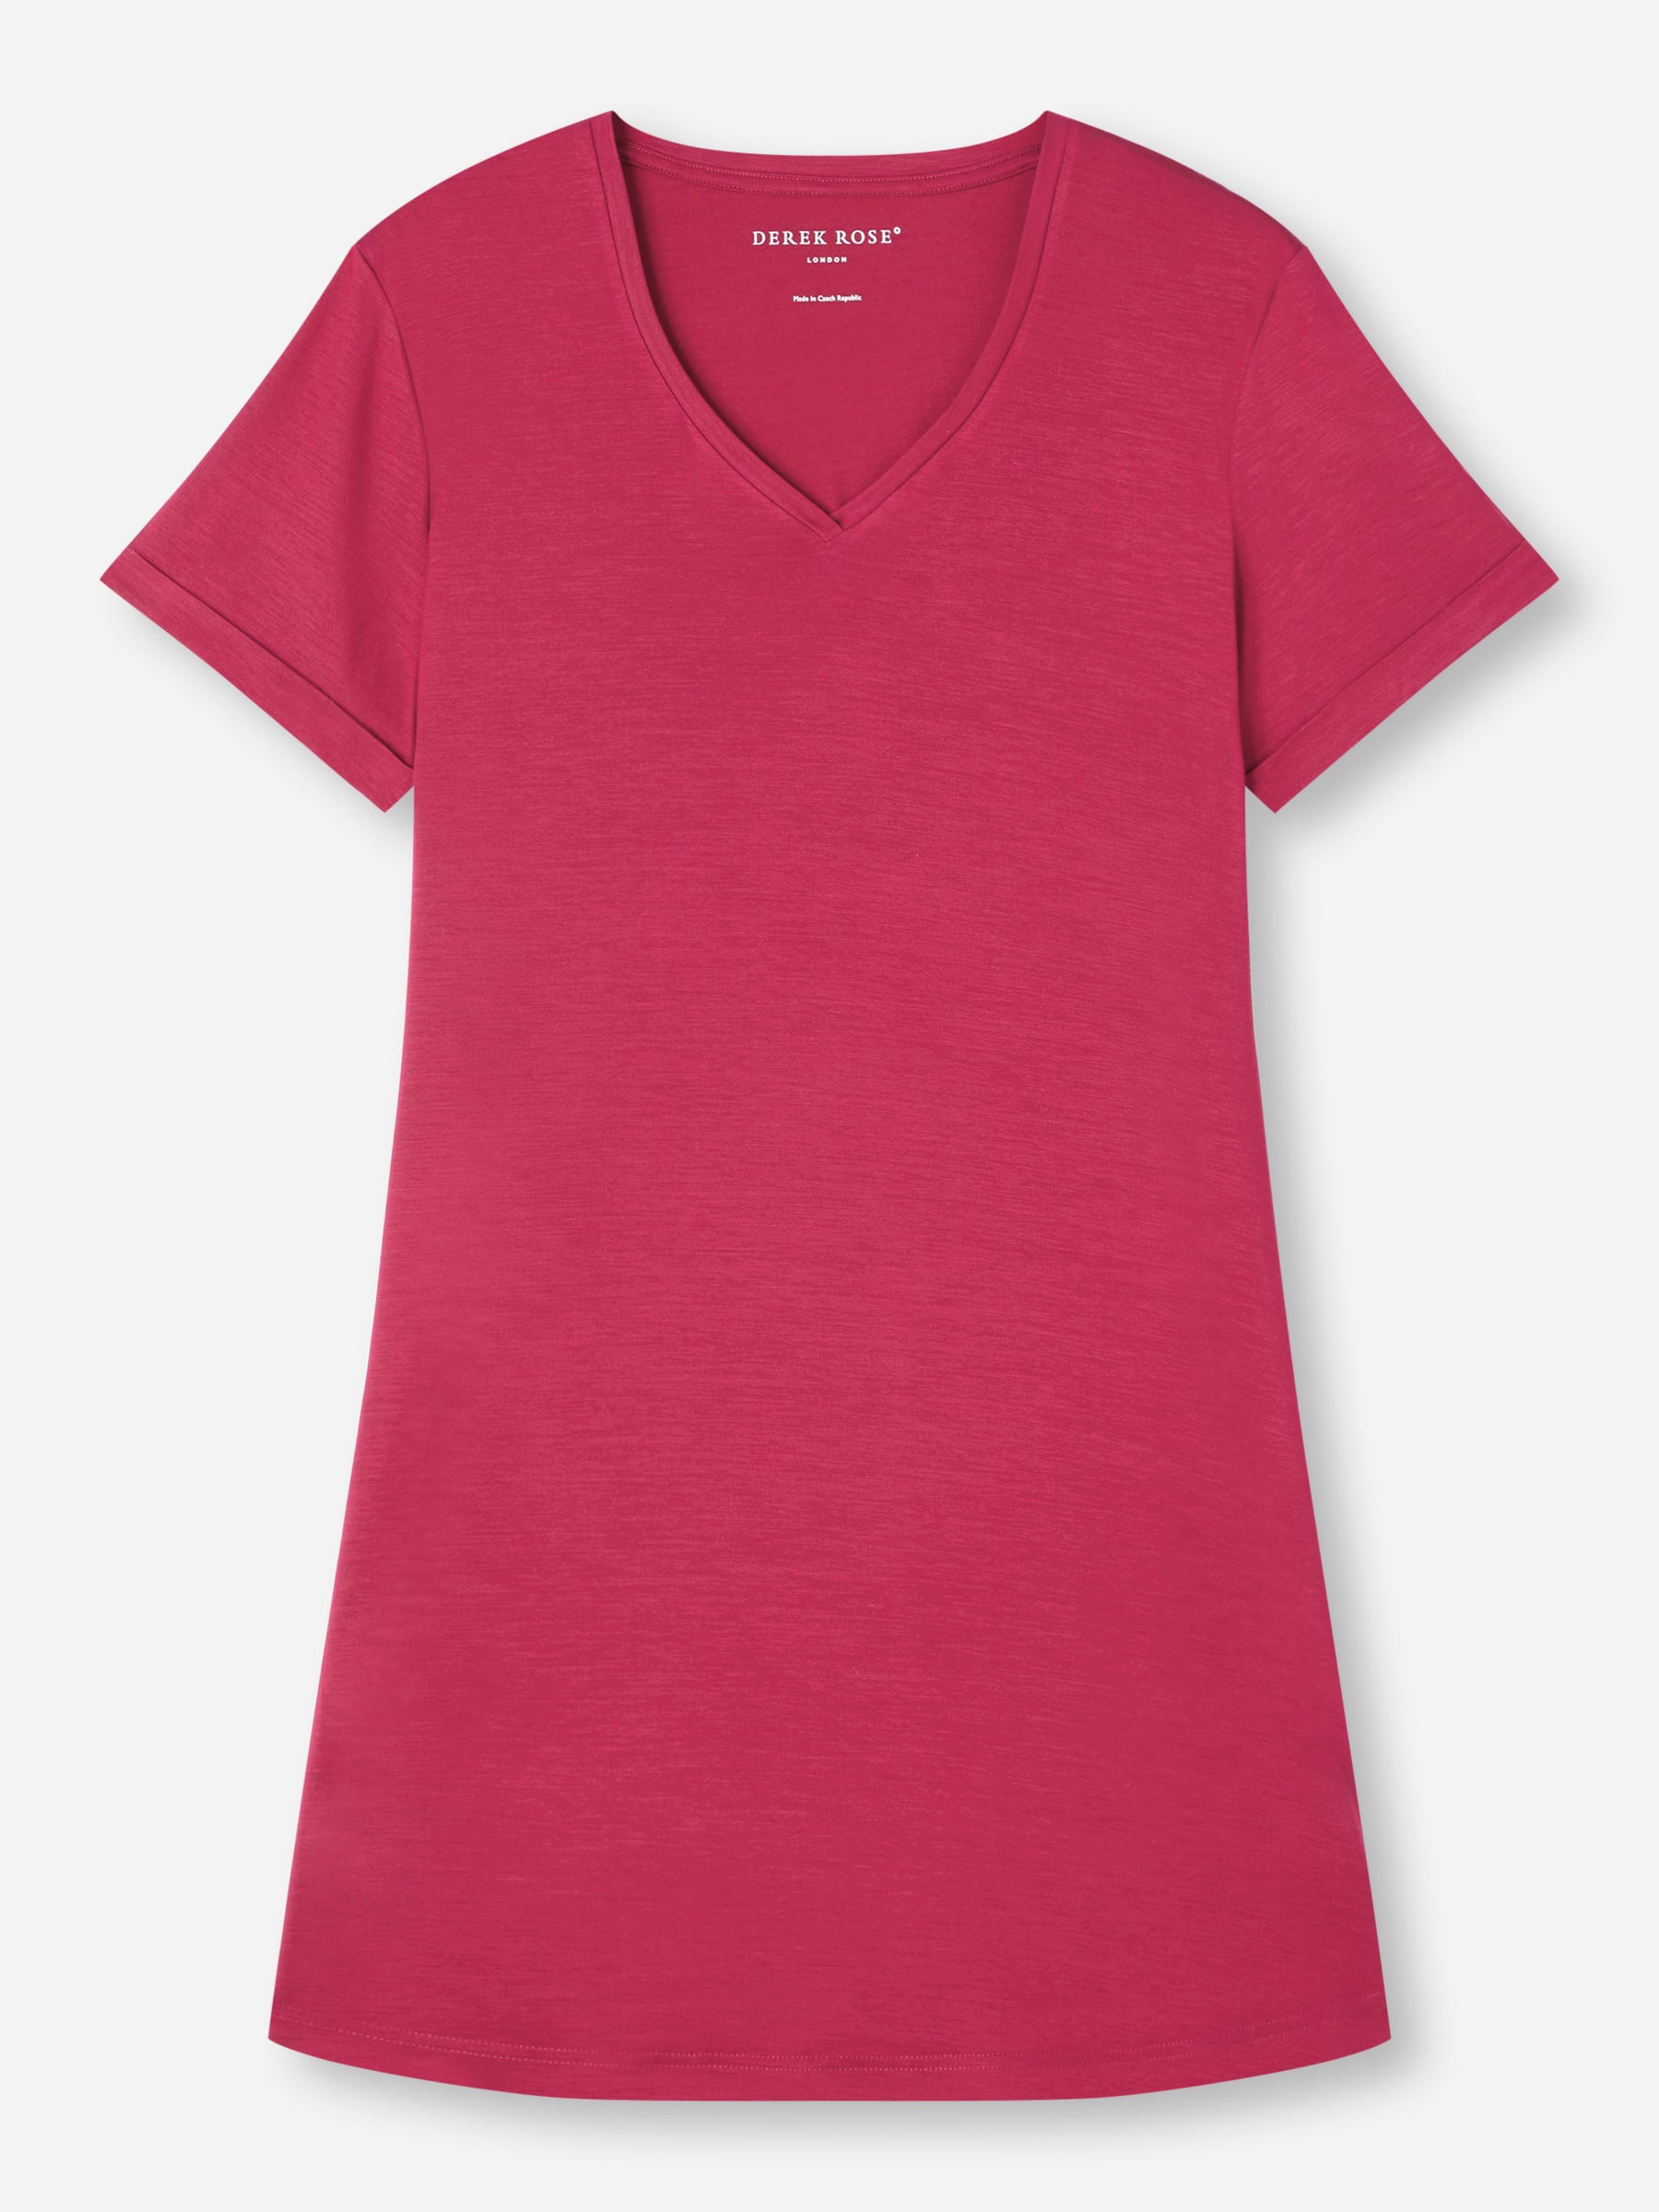 Women's V-Neck Sleep T-Shirt Lara Micro Modal Stretch Berry